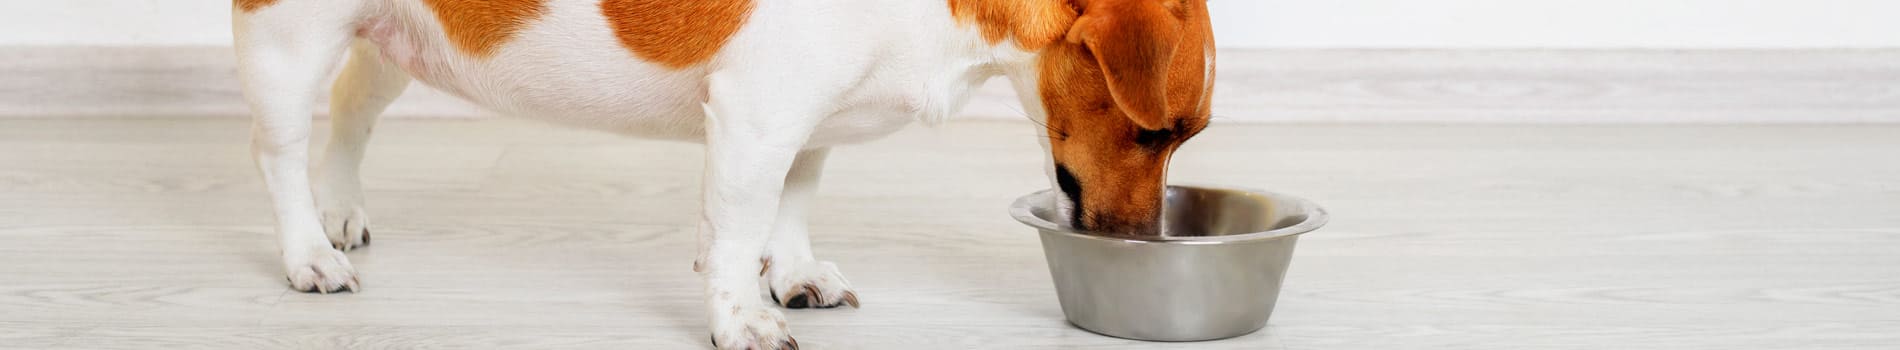 Petmeal dieta especializada para perros